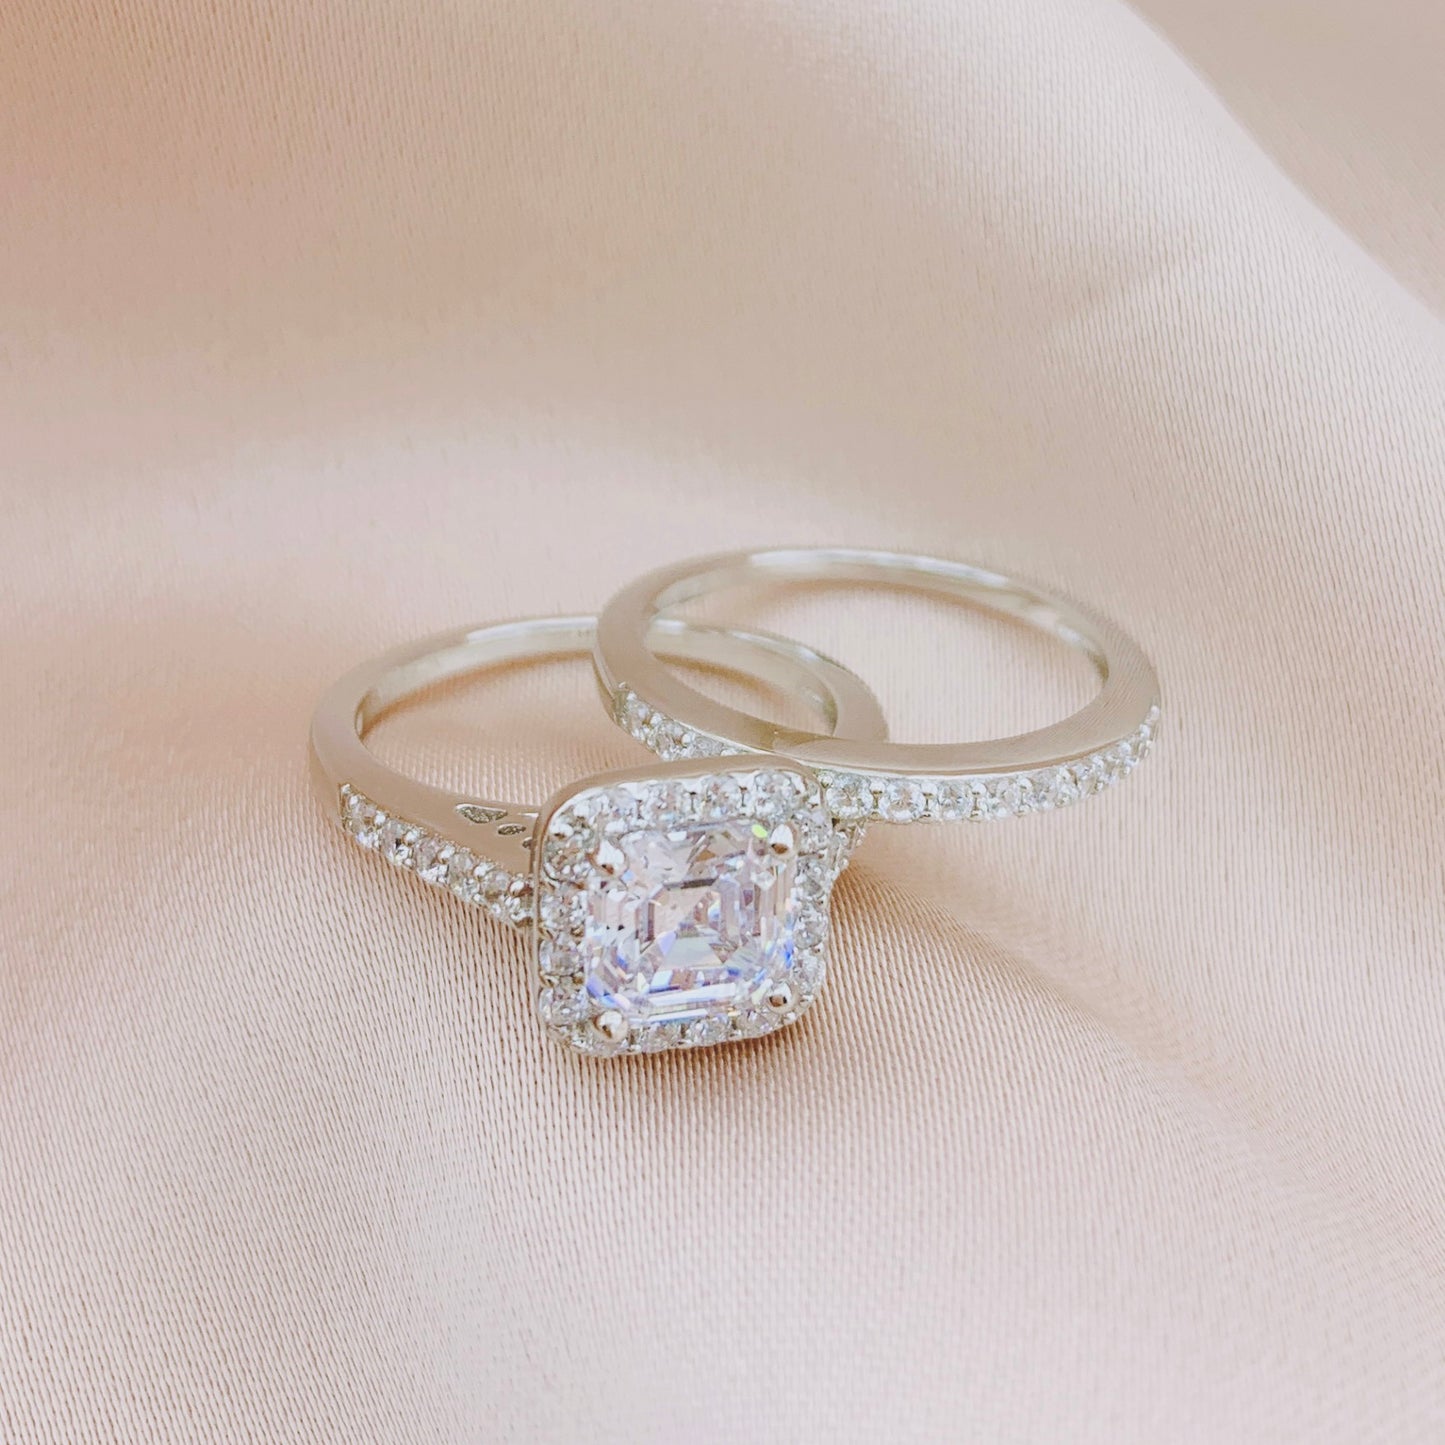 925 Silver CZ Engagement Wedding Bridal Ring Sets 2pcs